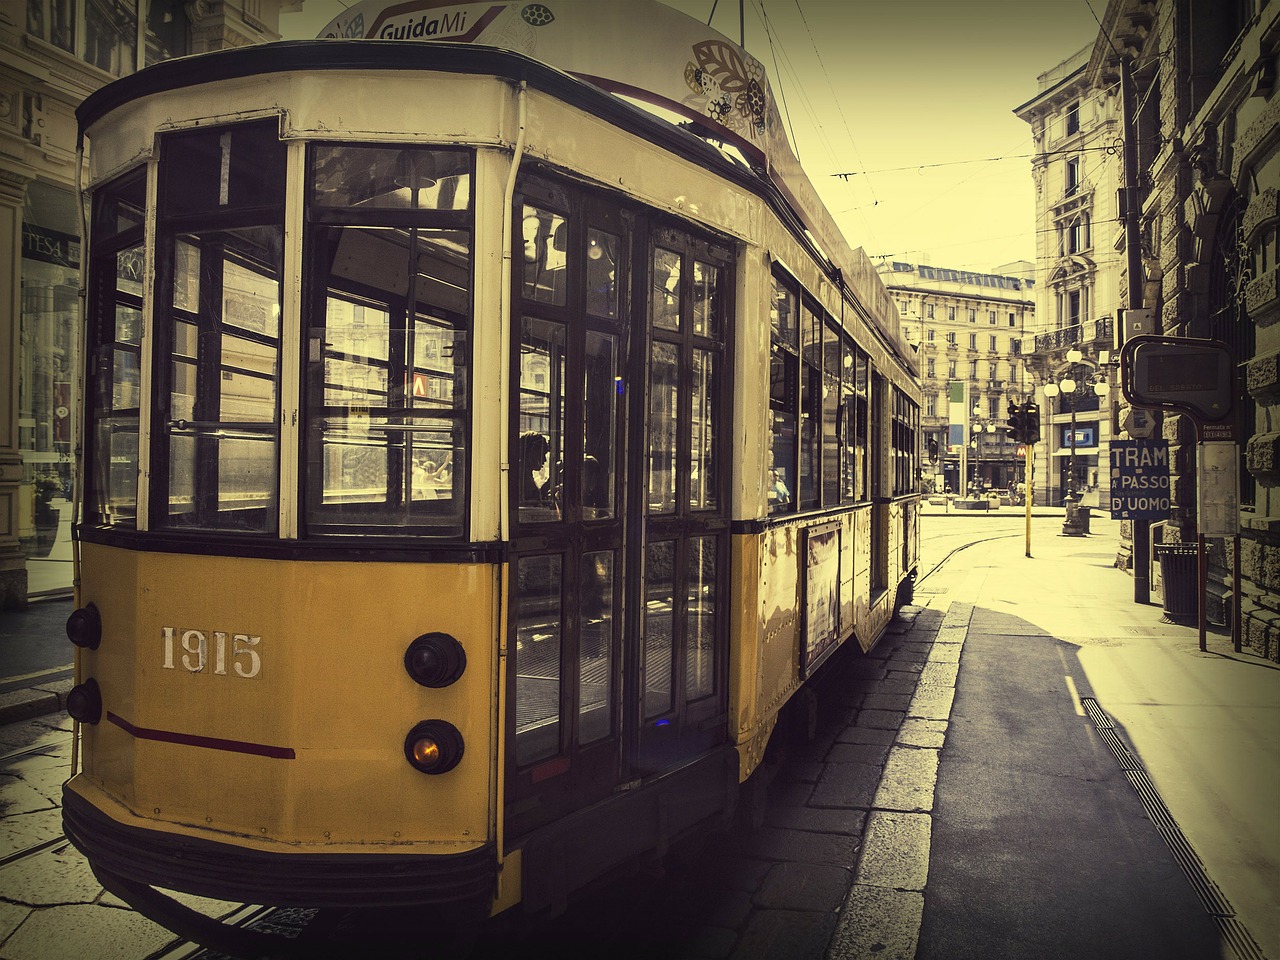 miland italy tram free photo